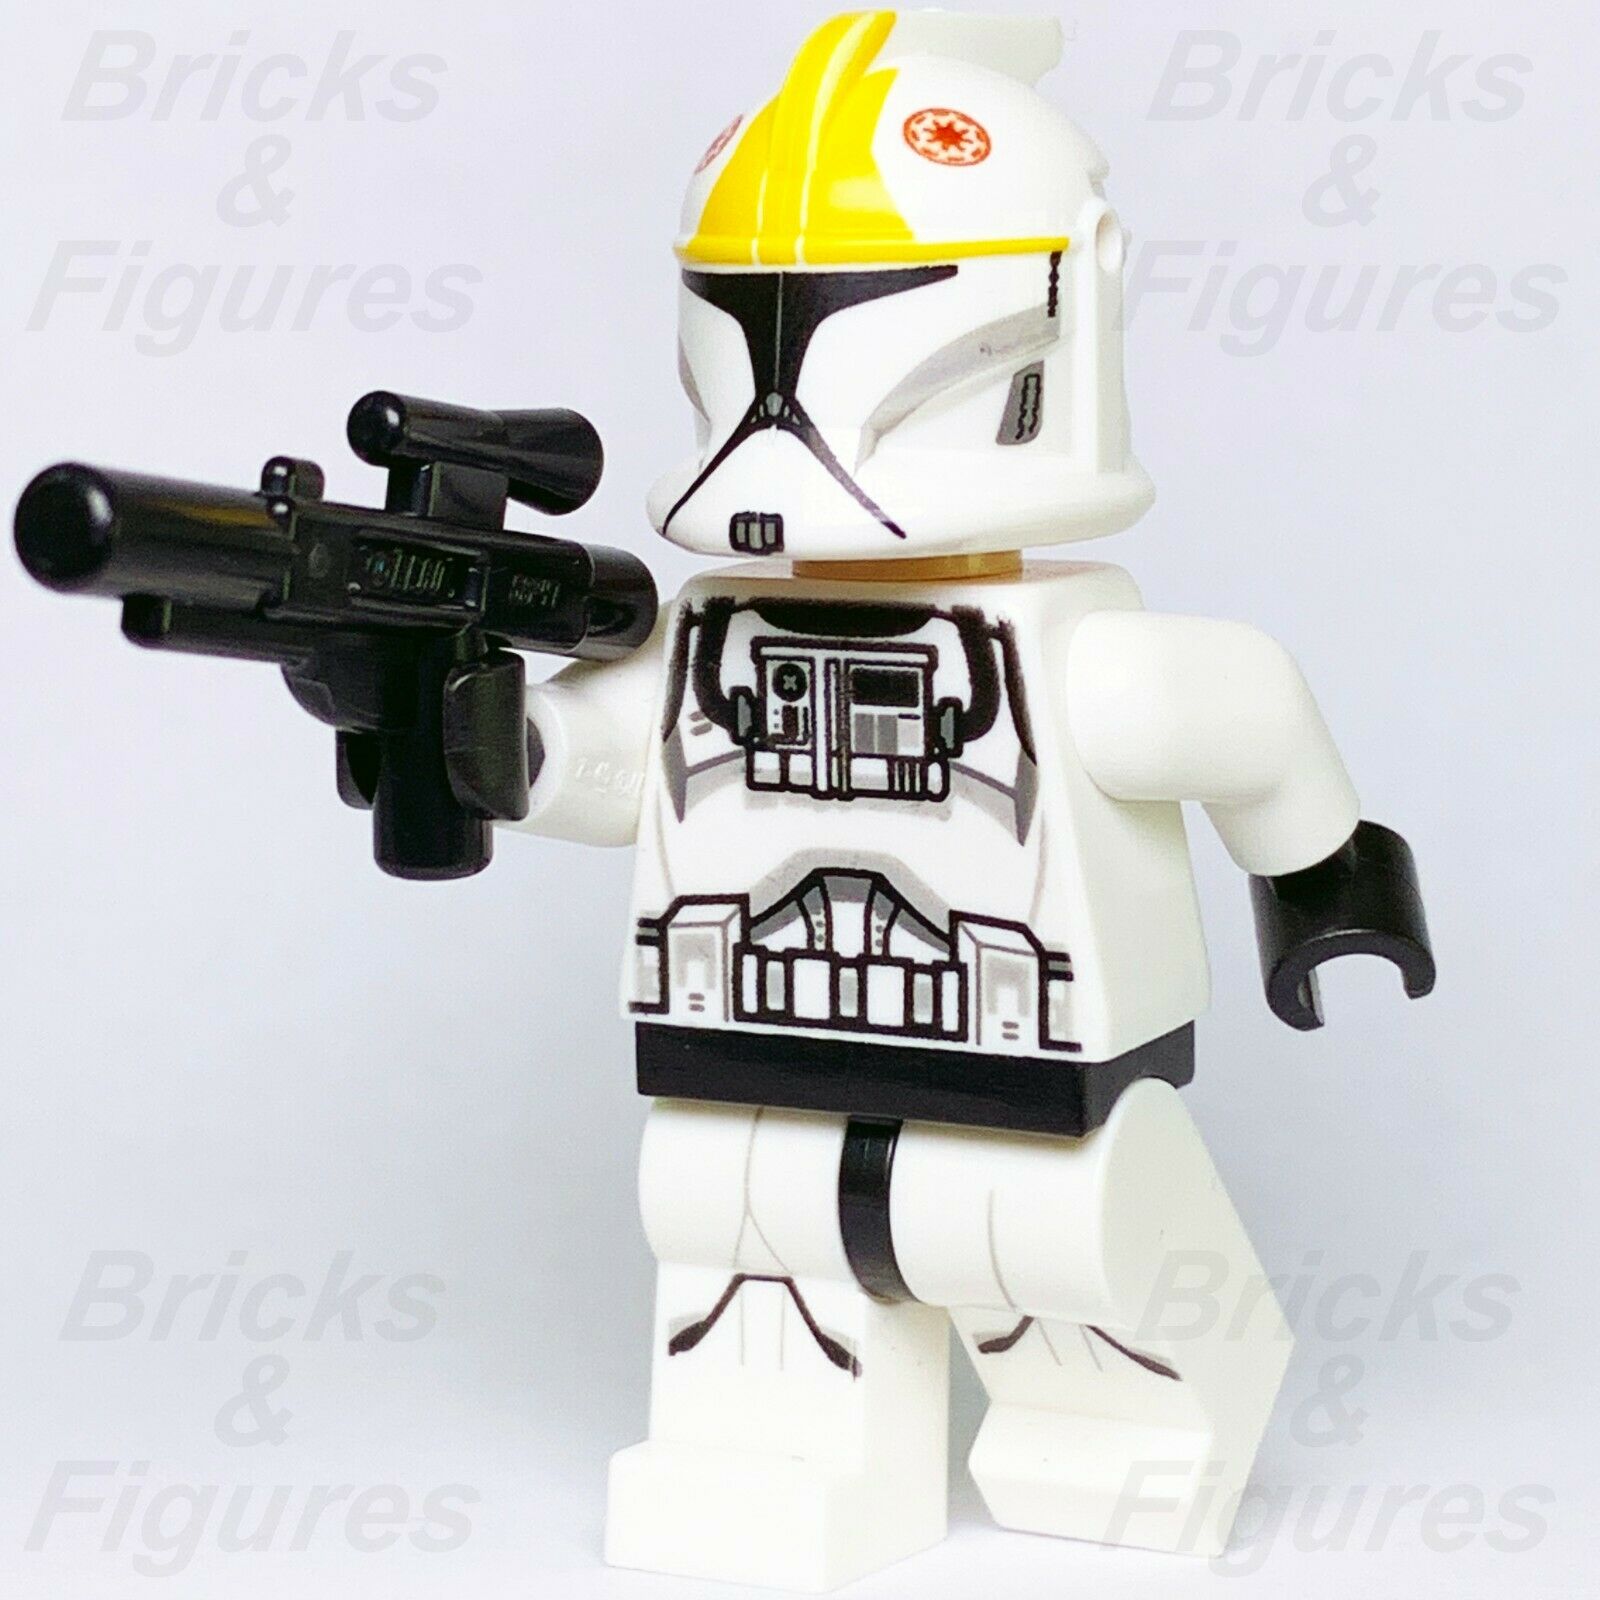 New Star Wars LEGO Phase 1 Clone Republic Gunship Pilot Trooper Minifig 75076 - Bricks & Figures